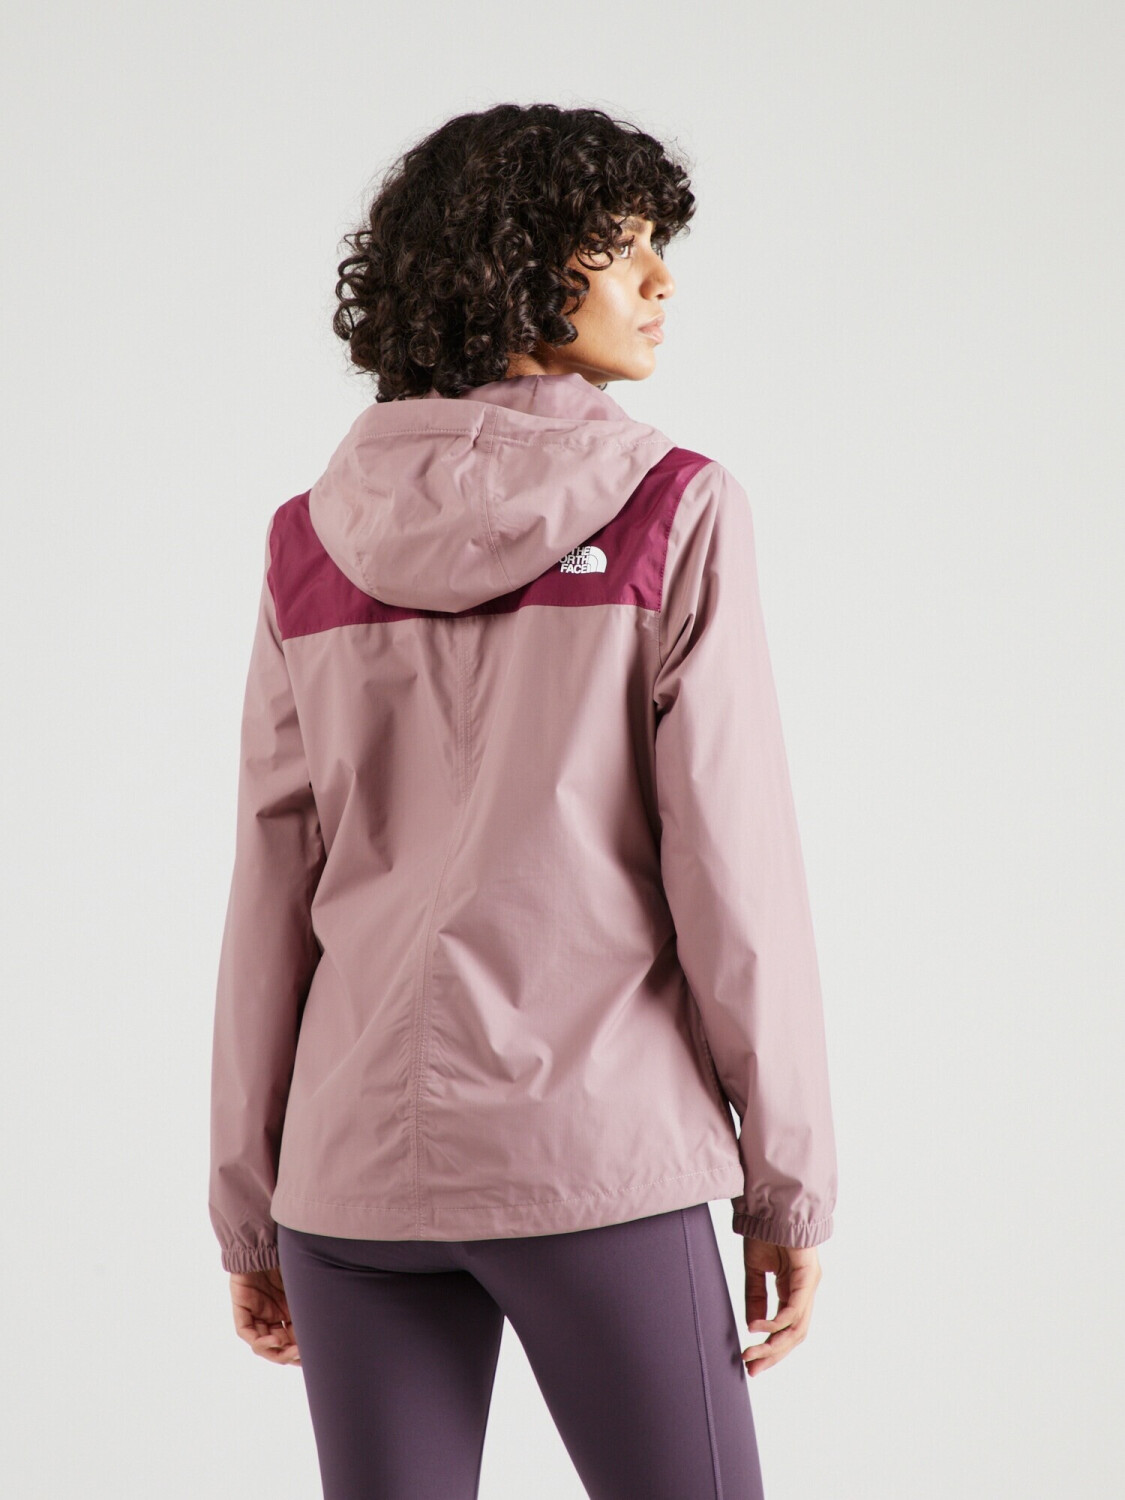 The North Face Women\'s Antora Jacket fawn grey/boysenberry ab 78,59 € |  Preisvergleich bei